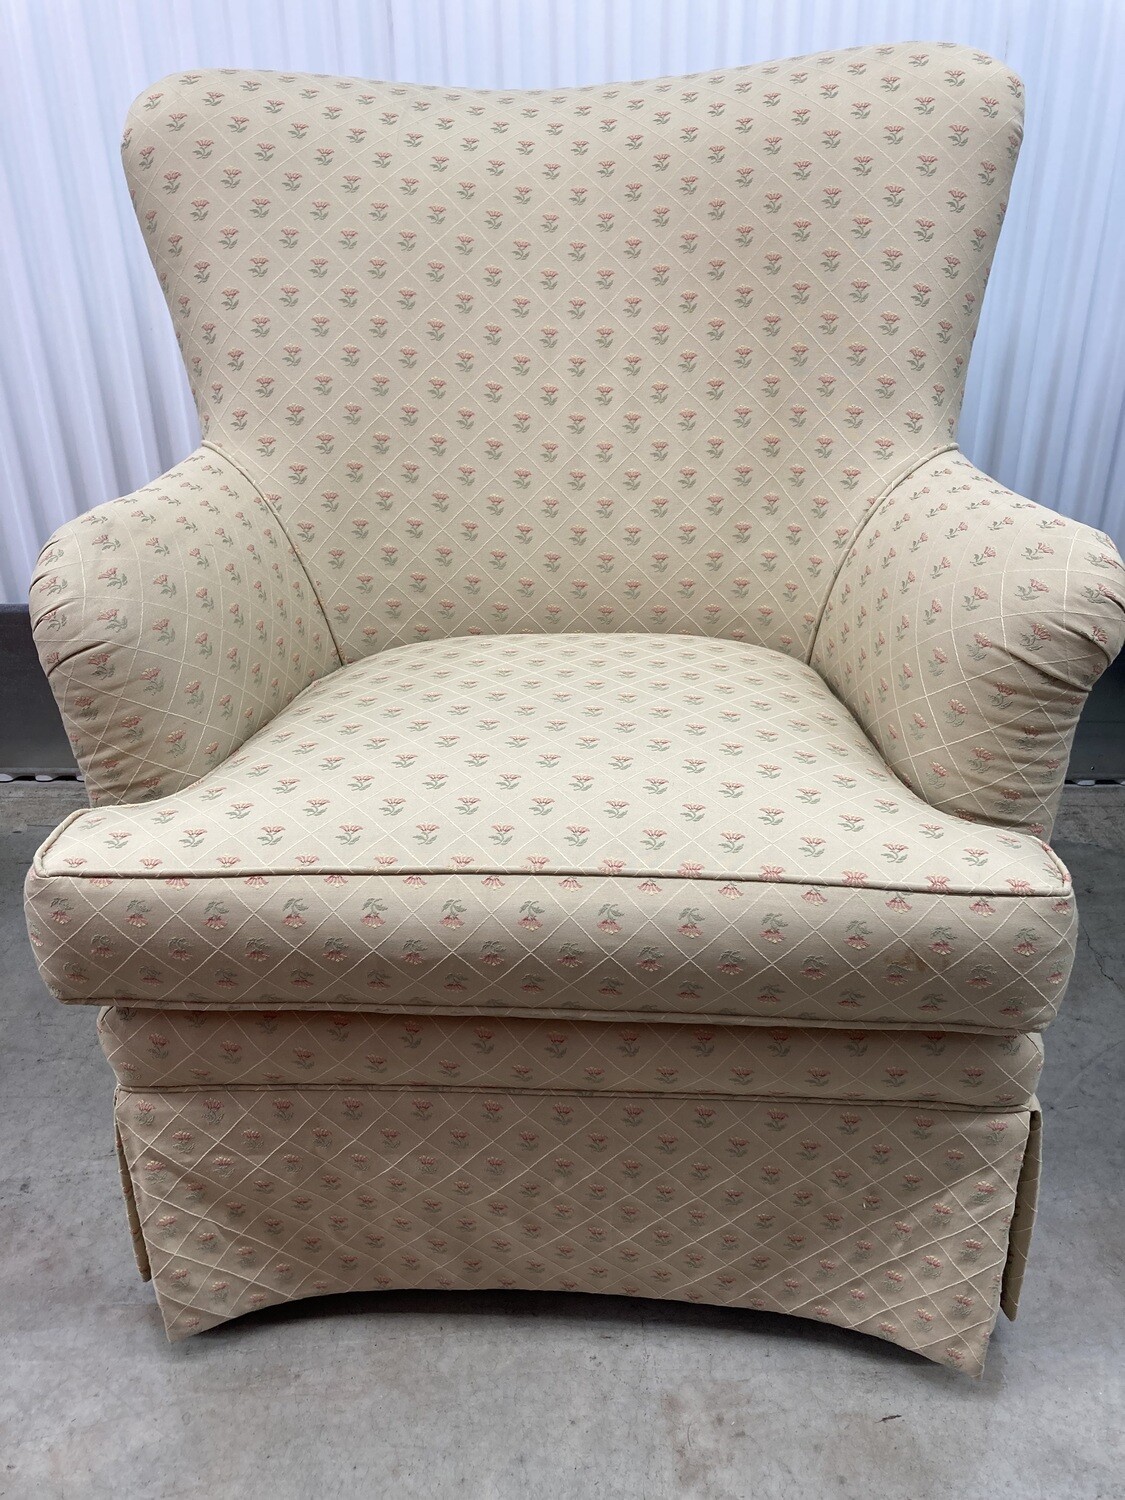 Huntington House Arm Chair, yellow print #2199